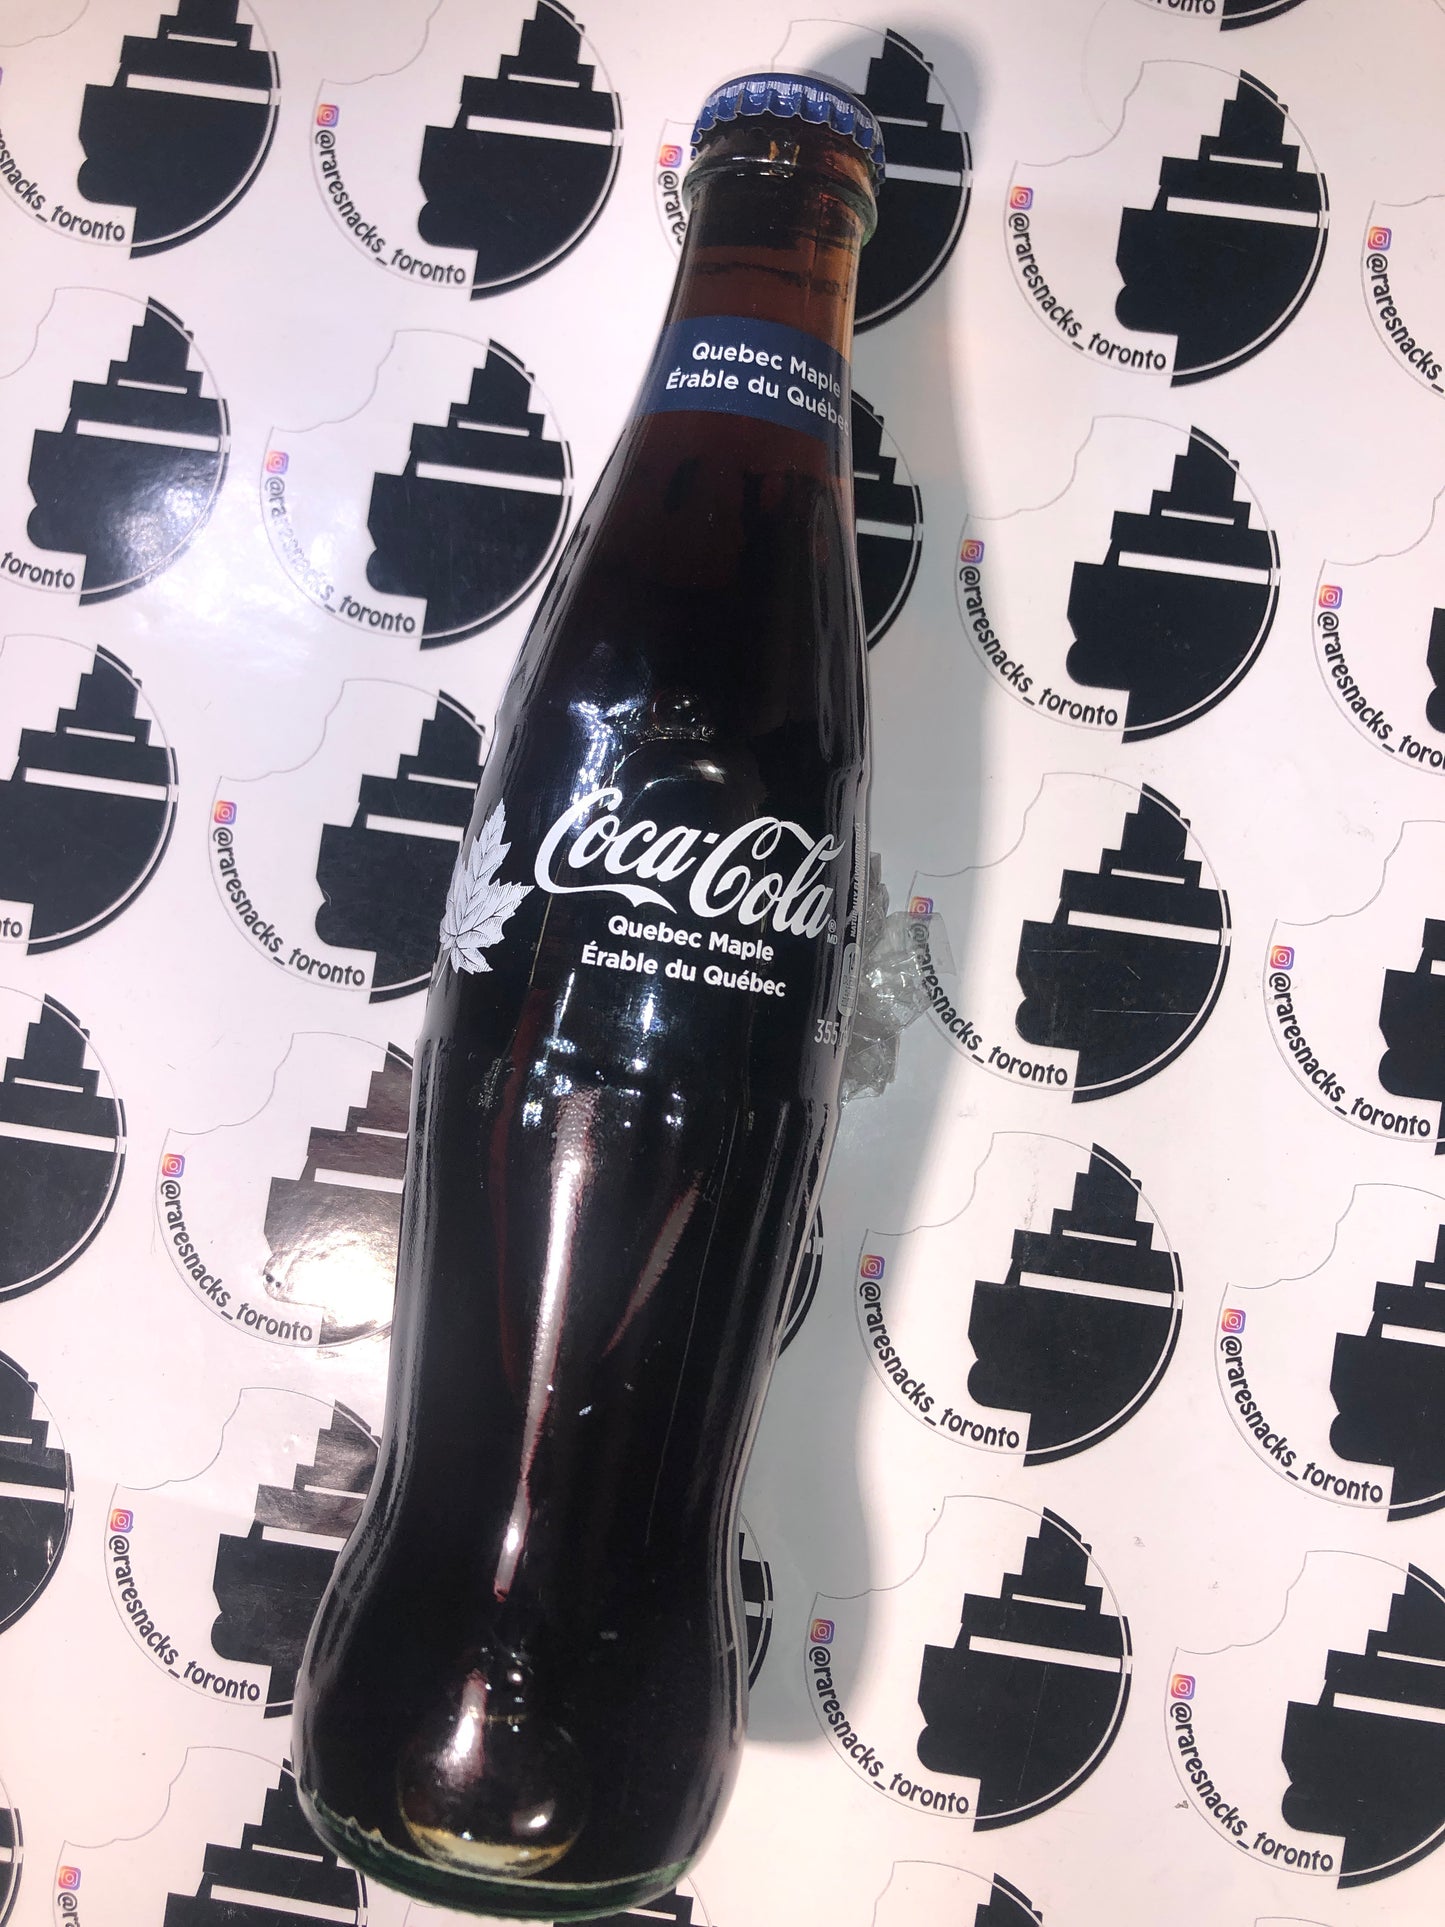 Coca-Cola Quebec Maple Glass Bottle